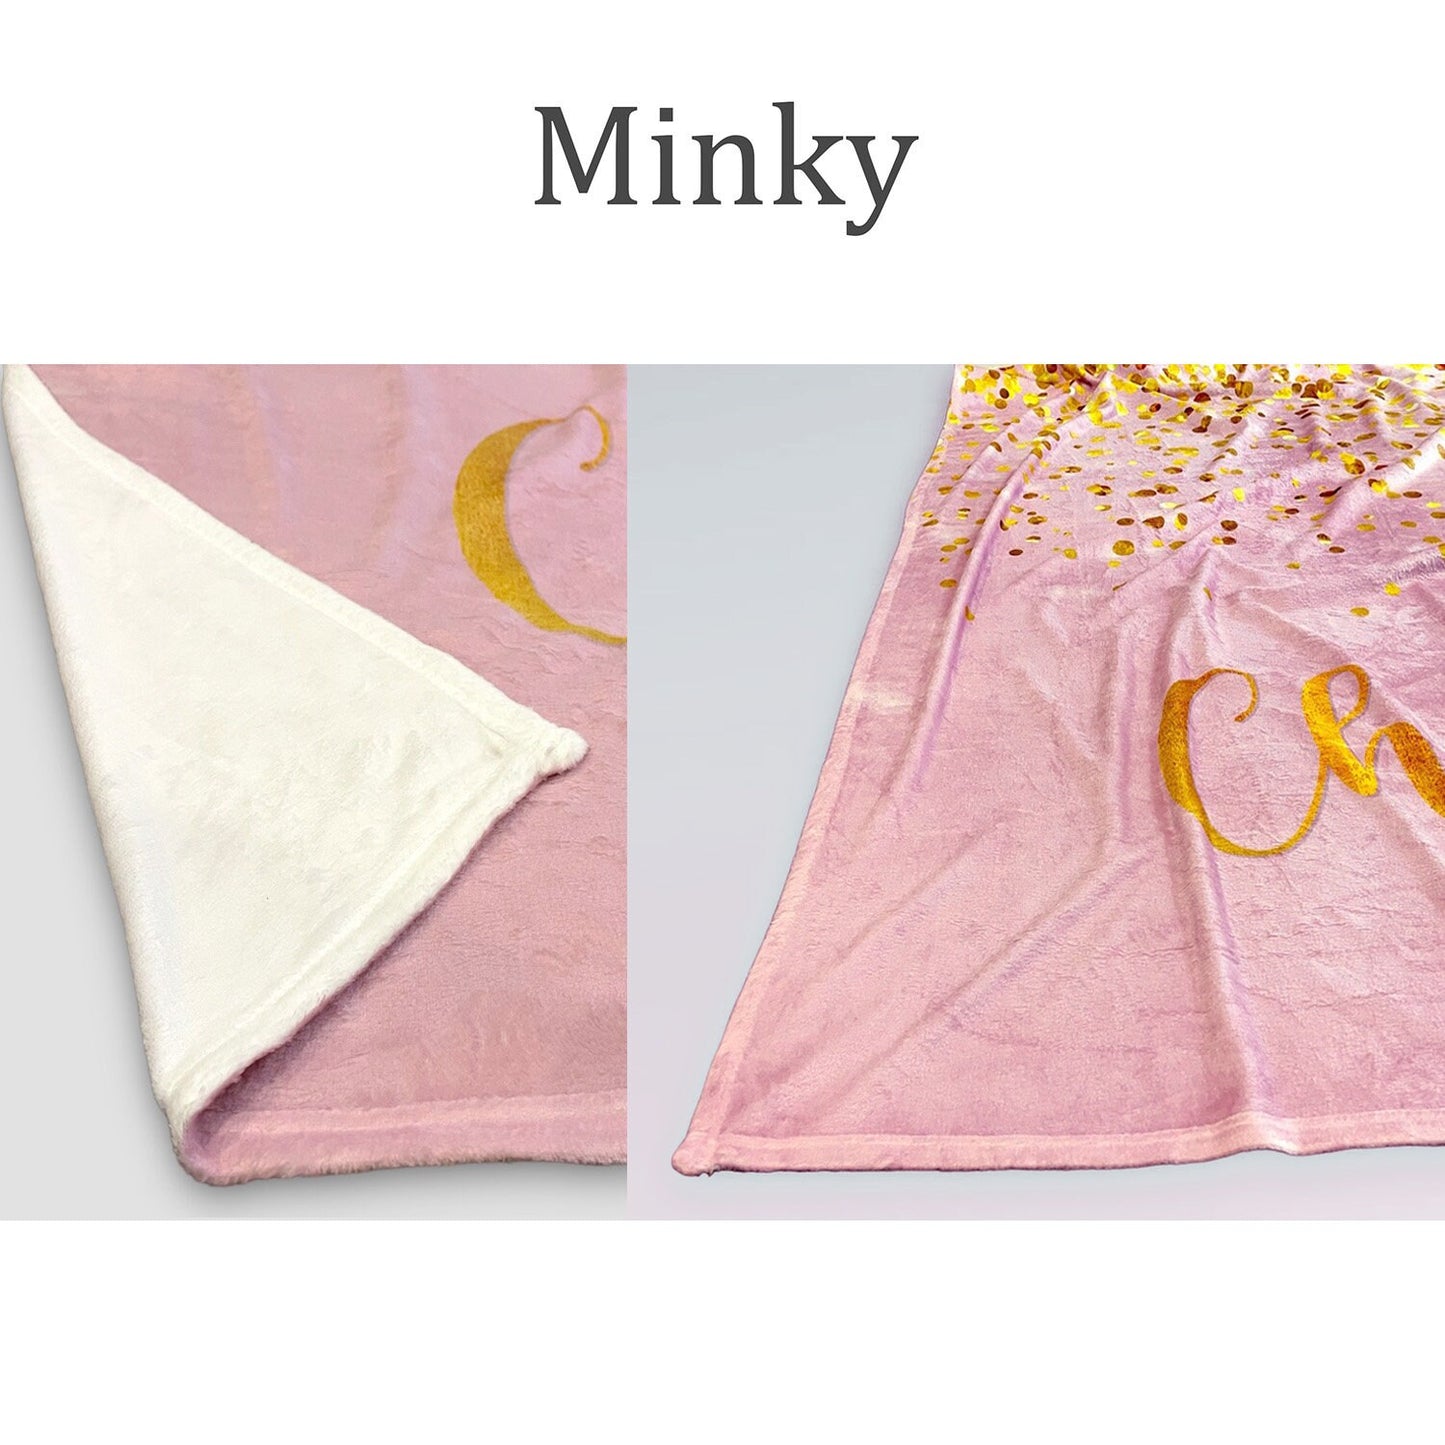 Sports Jersey Personalized blanket, Minky or Sherpa custom blanket, personalization blanket, birthday gift idea